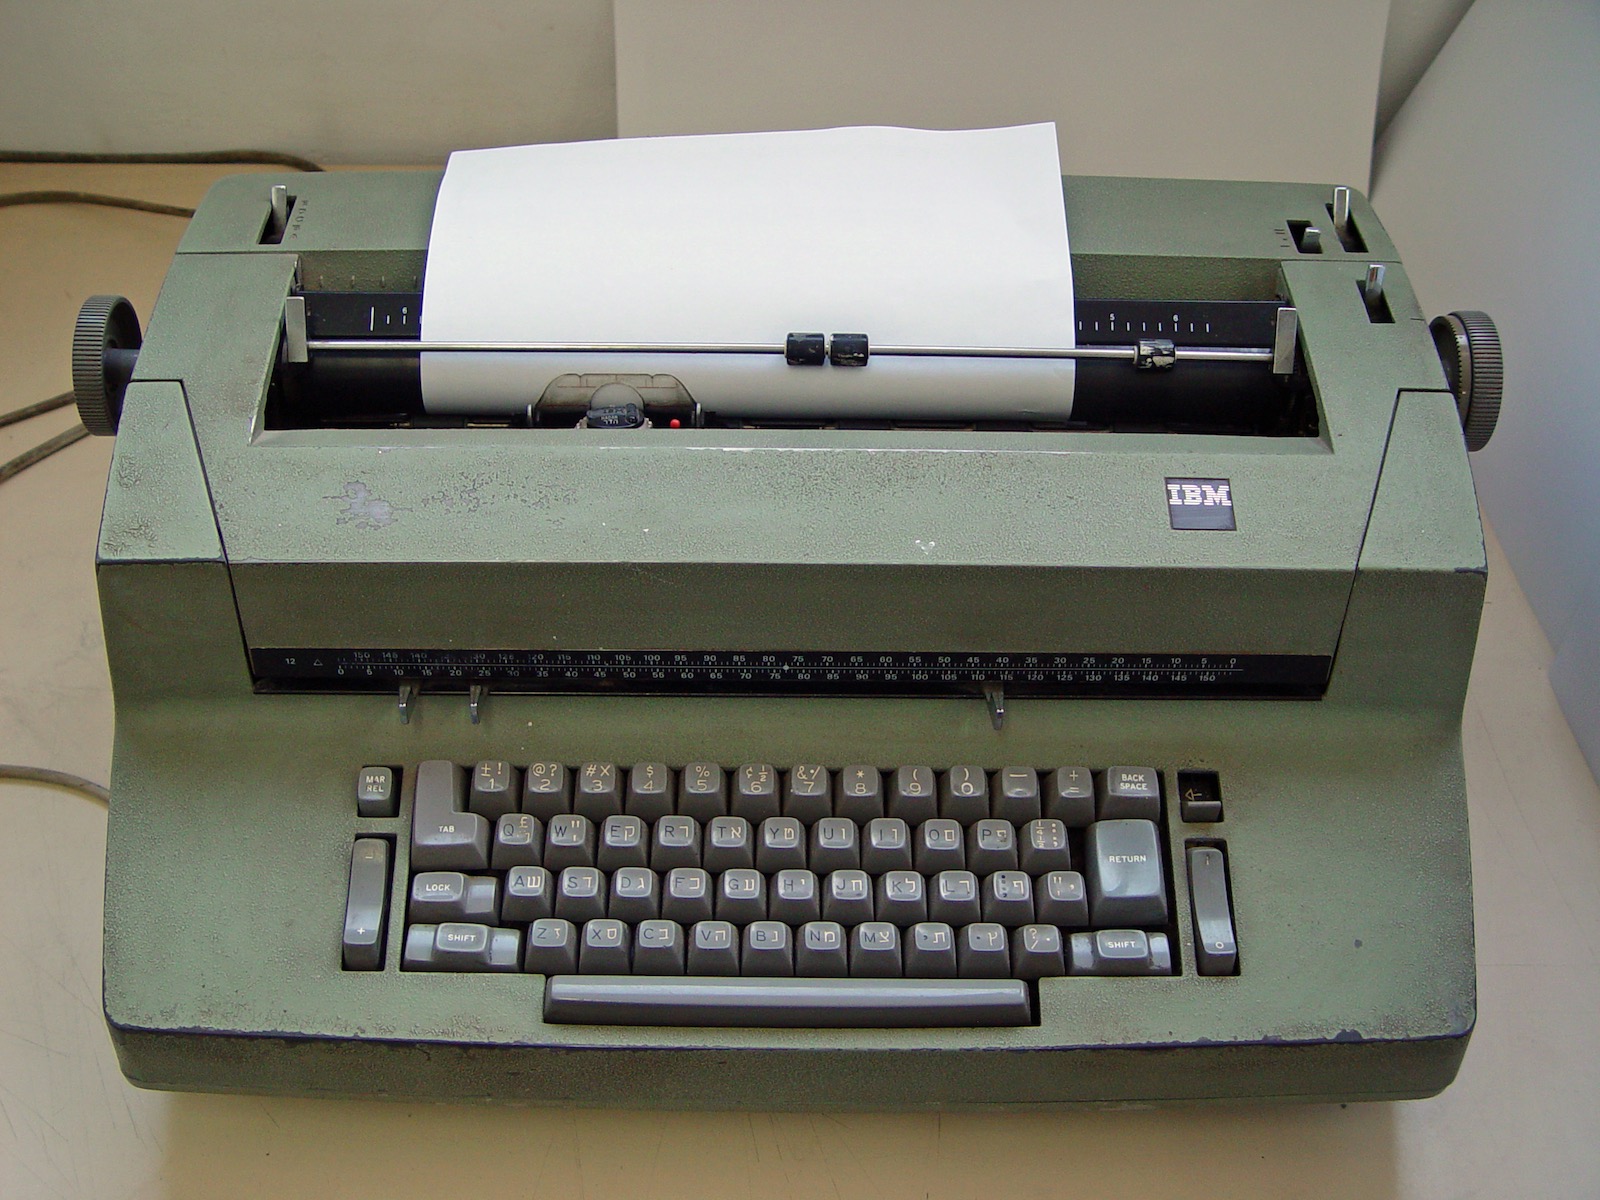 Figure 22: Selectric typewriter. Source: Wikipedia.